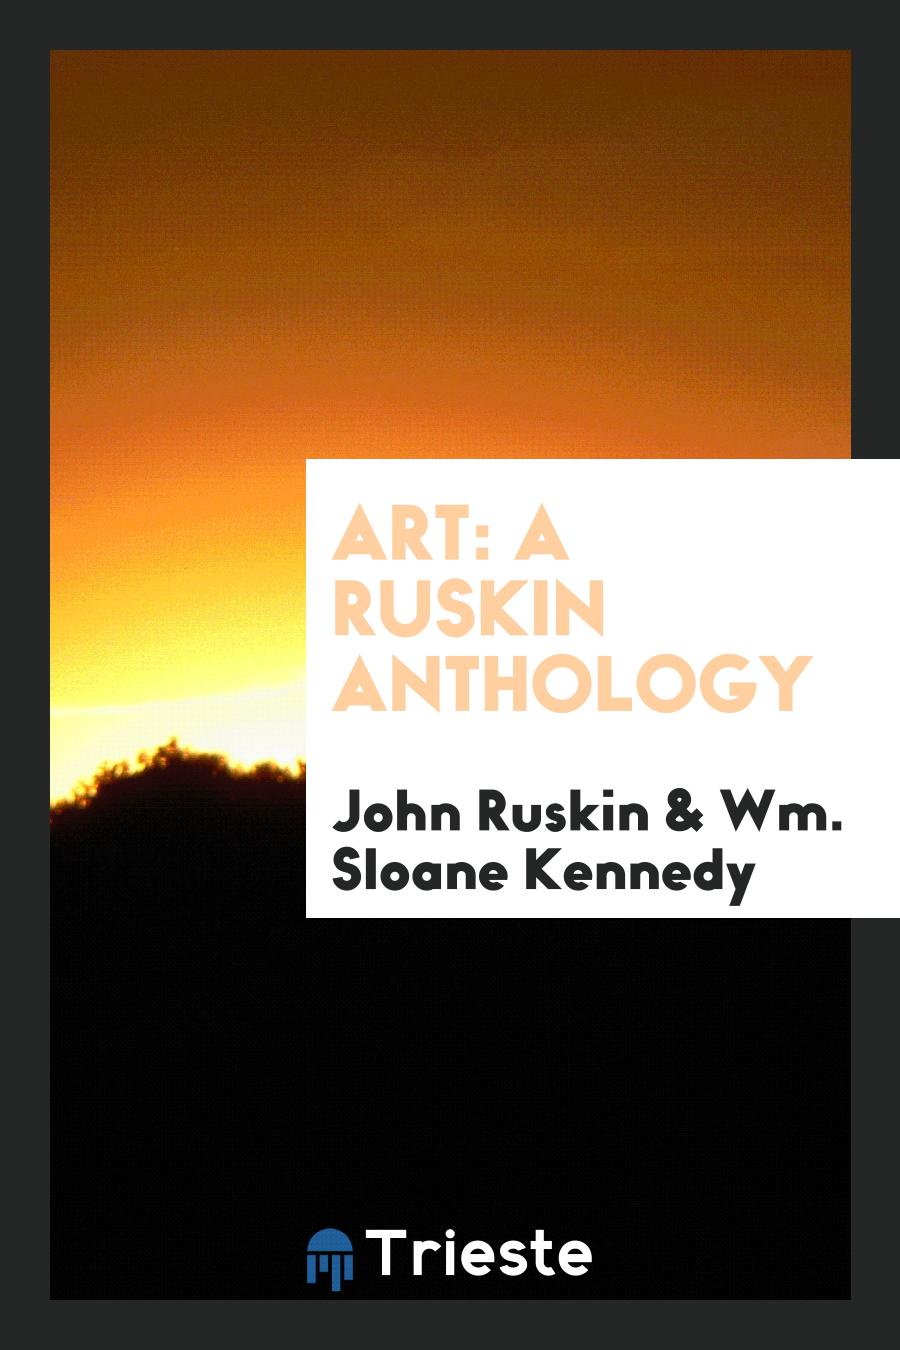 Art: a Ruskin Anthology